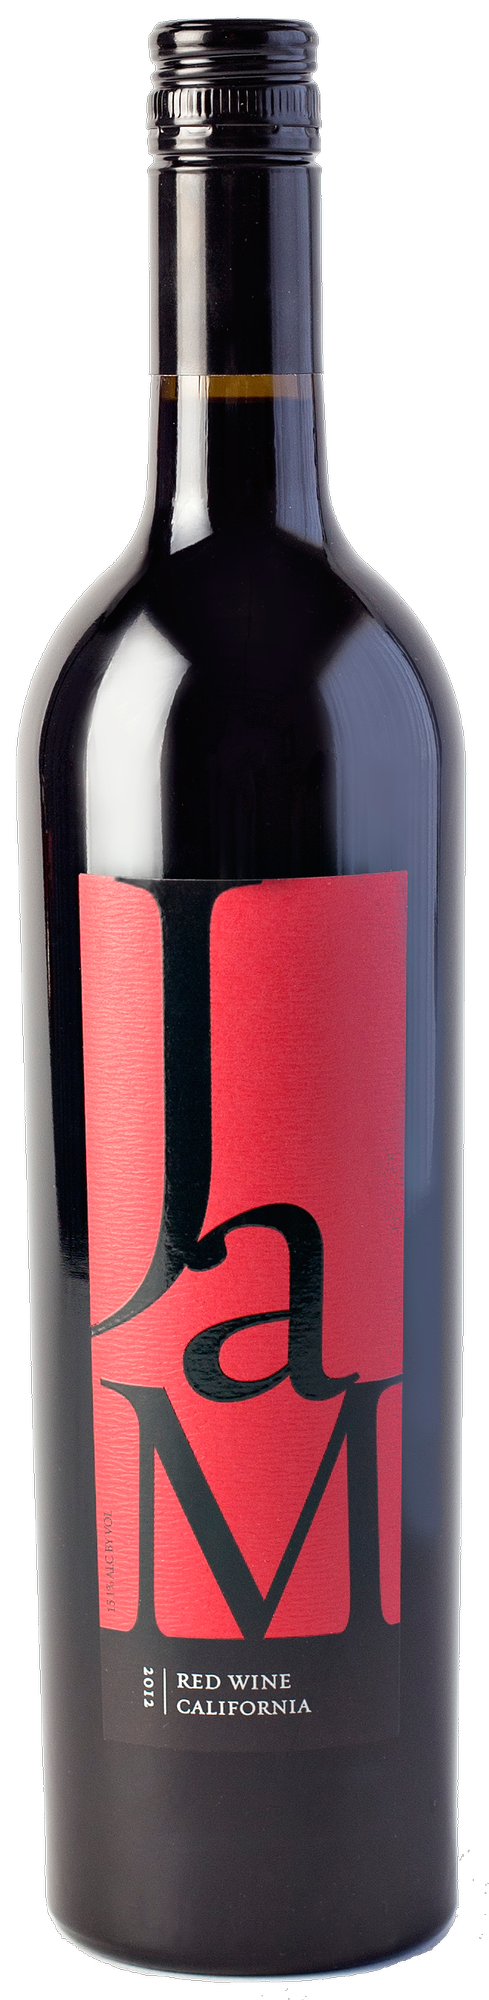 2012 JaM Red Wine 750 mL